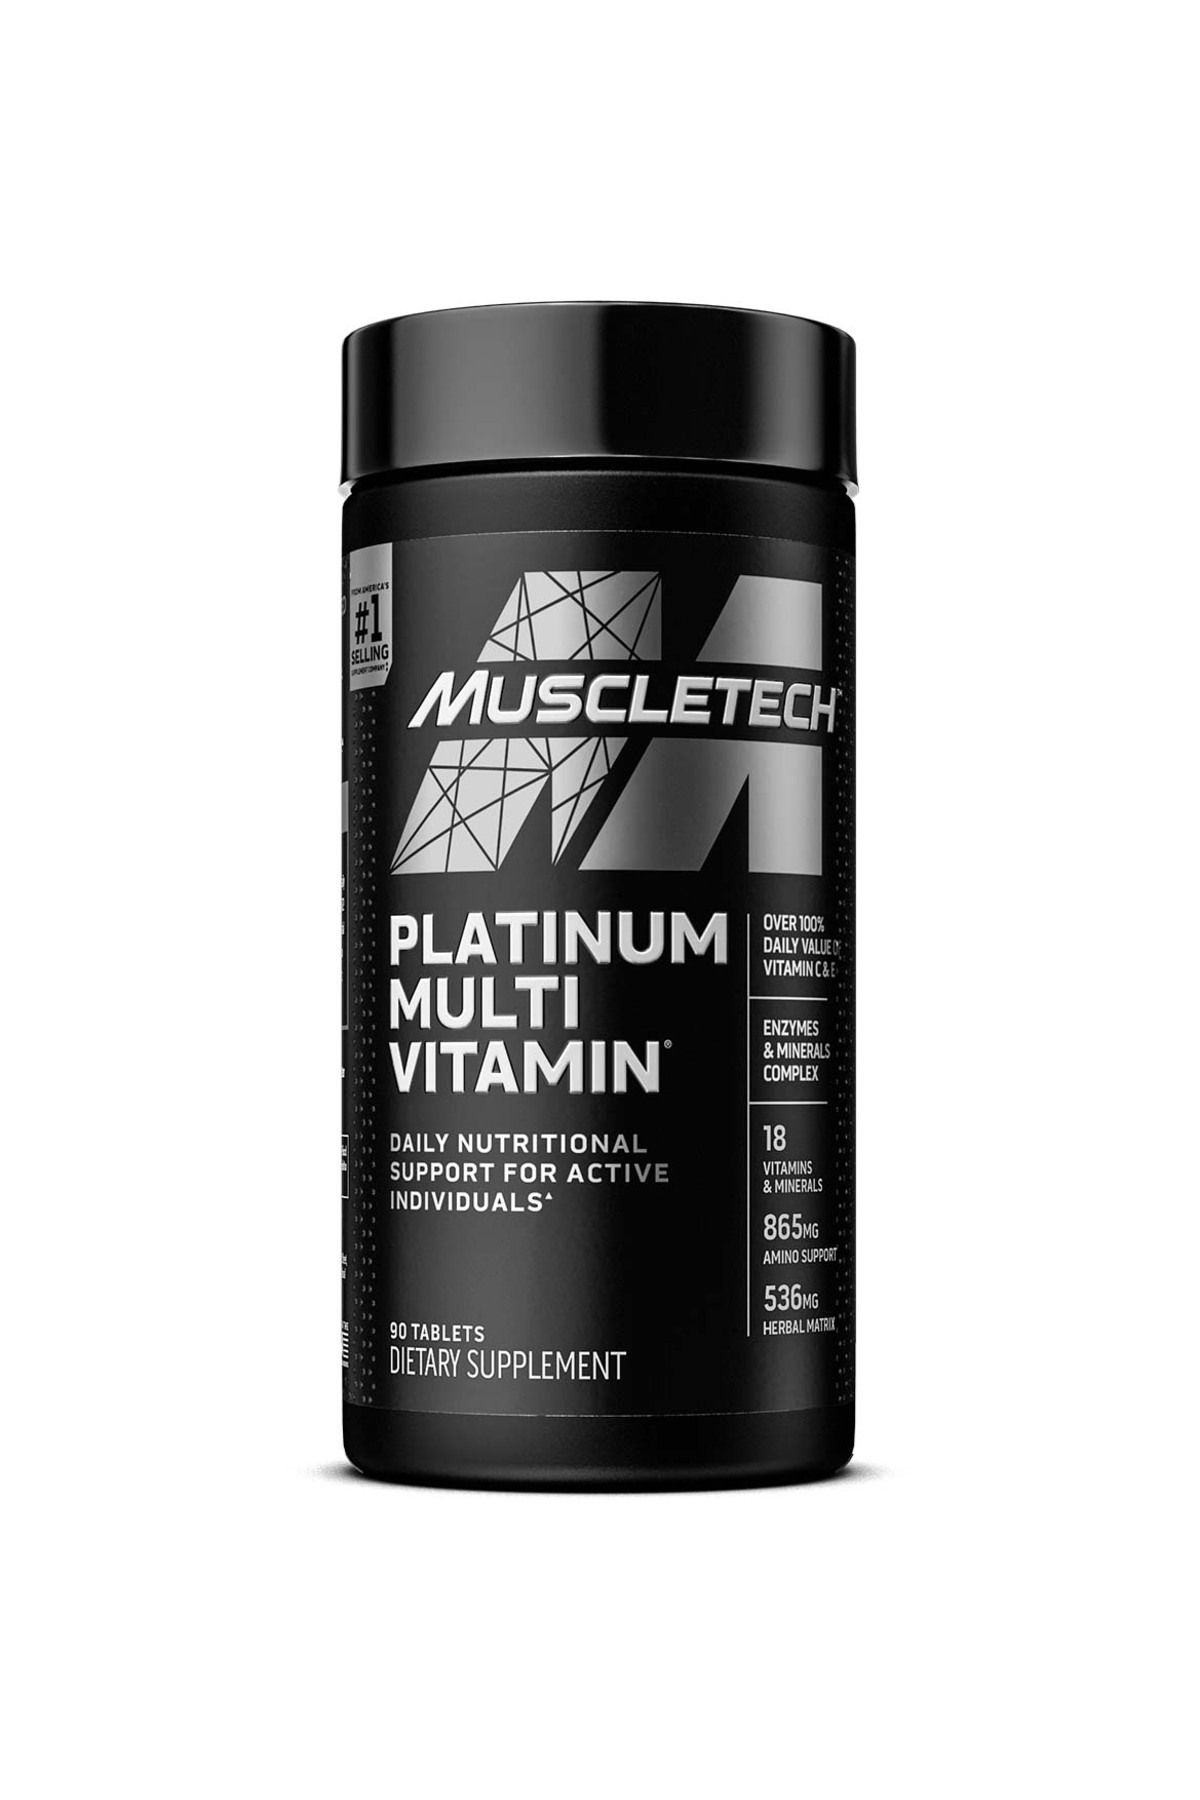 Muscletech Platinum Multivitamin 18 Vitamin